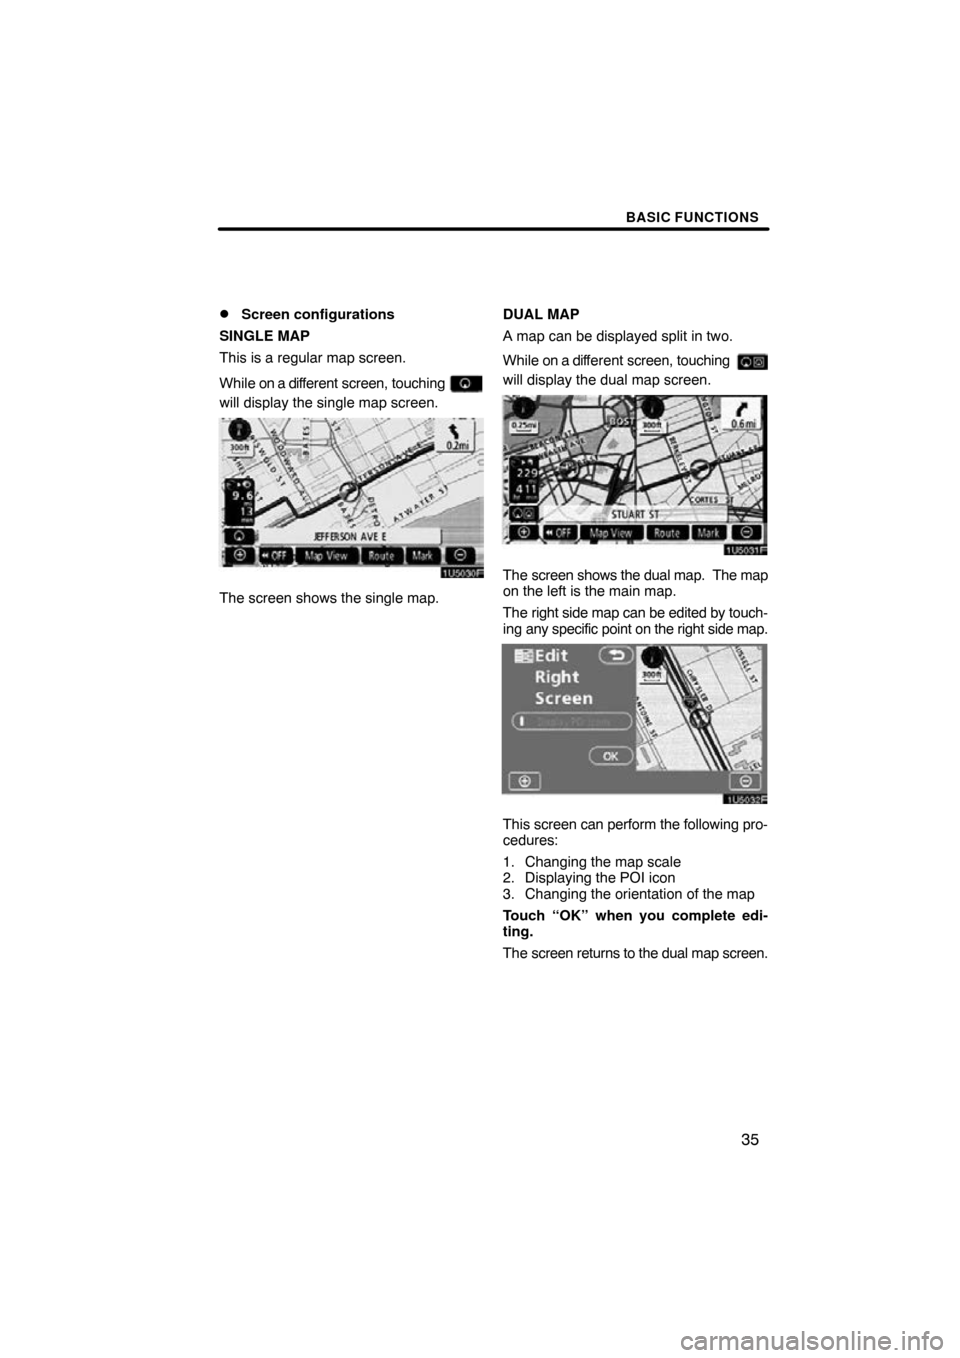 TOYOTA CAMRY 2009 XV40 / 8.G Navigation Manual BASIC FUNCTIONS
35

Screen configurations
SINGLE MAP
This is a regular map screen.
While on a dif ferent screen, touching 
will display the single map screen.
The screen shows the single map. DUAL MA